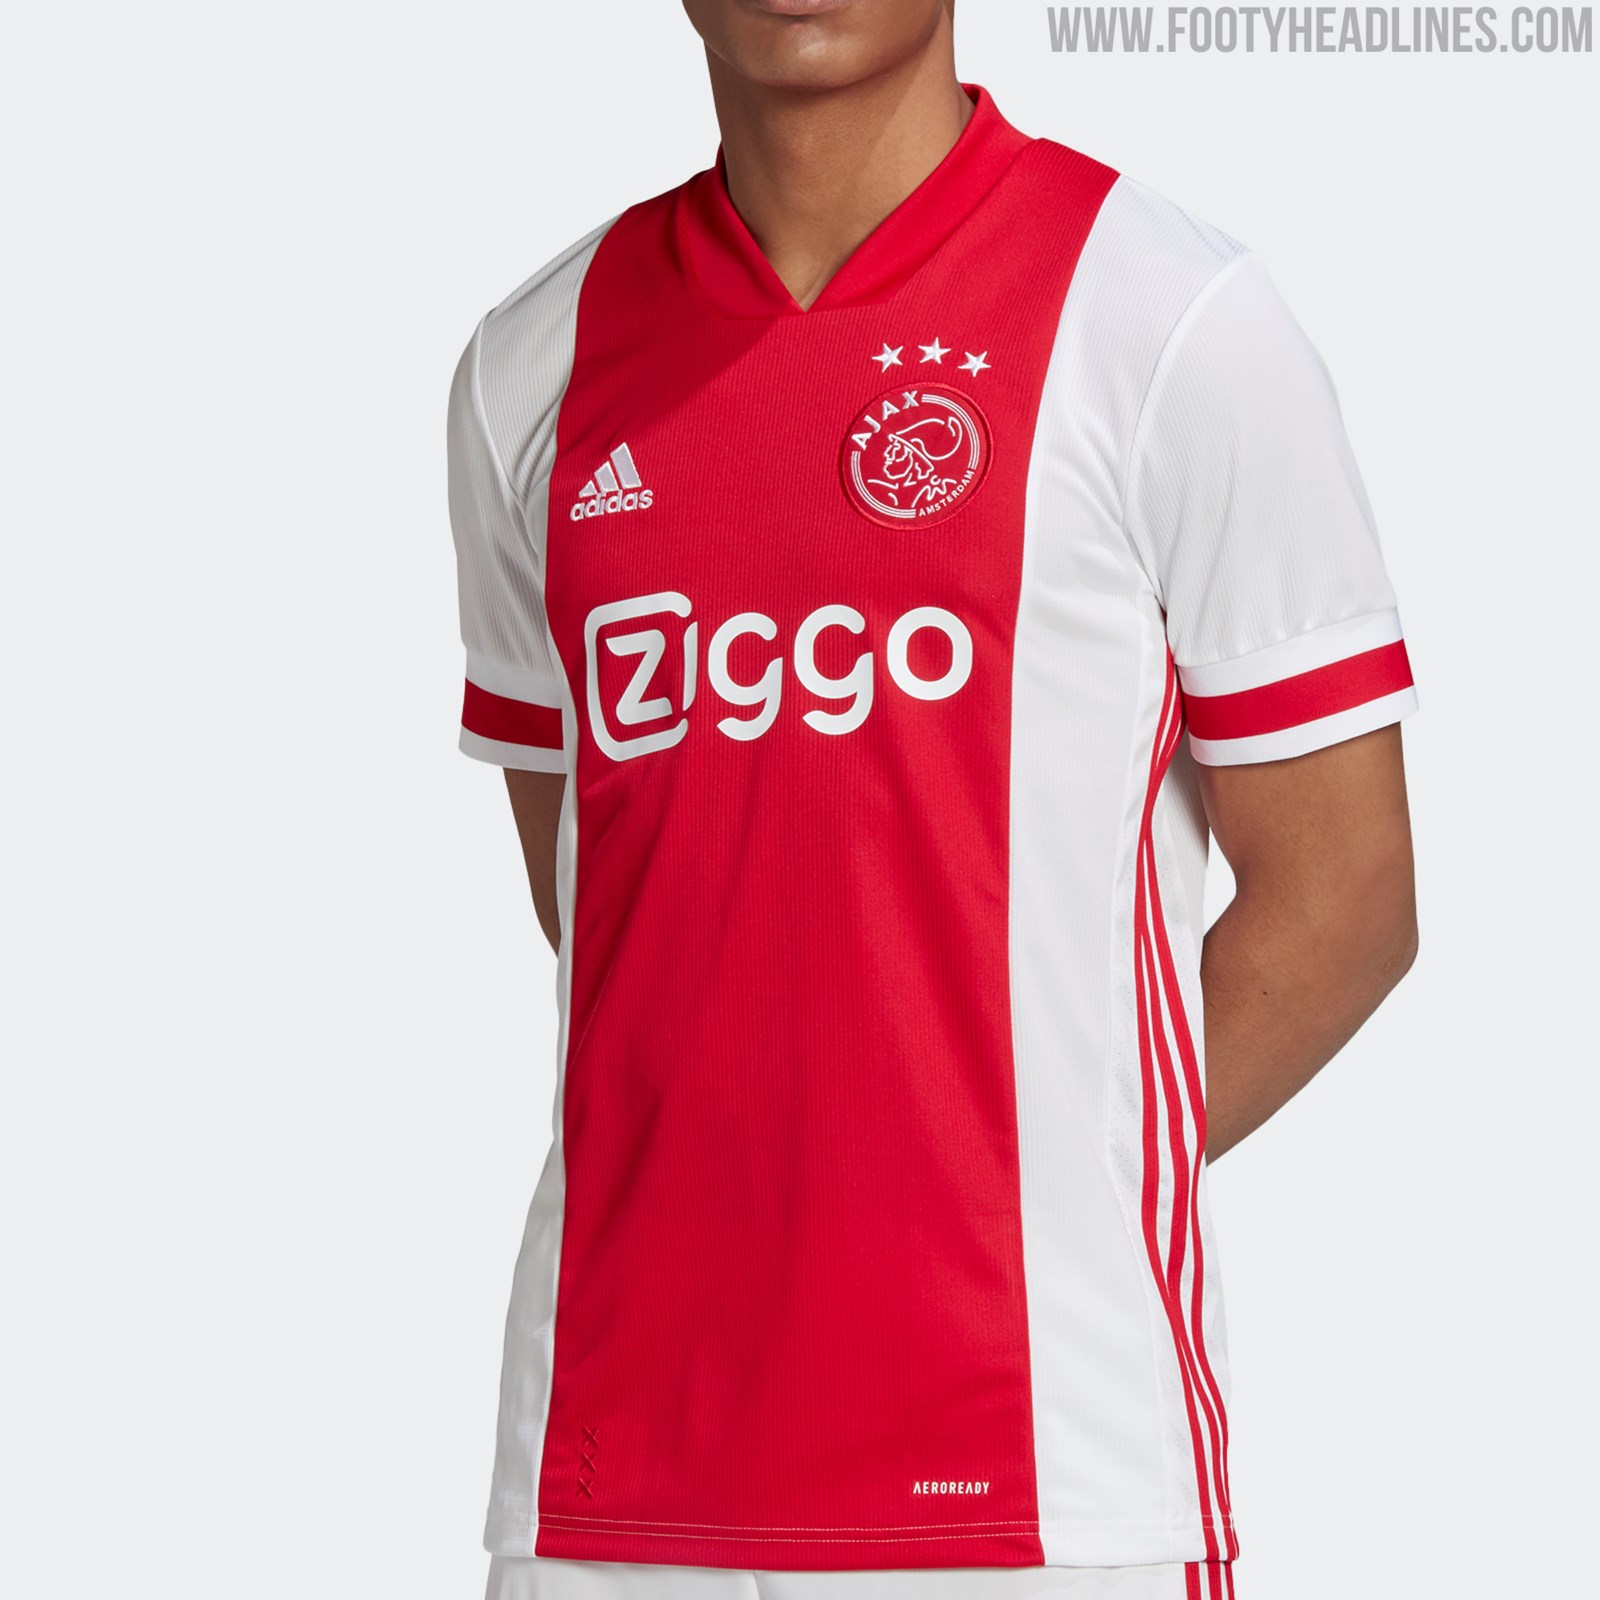 Ajax 2020-21 Adidas Champions League Kit » The Kitman